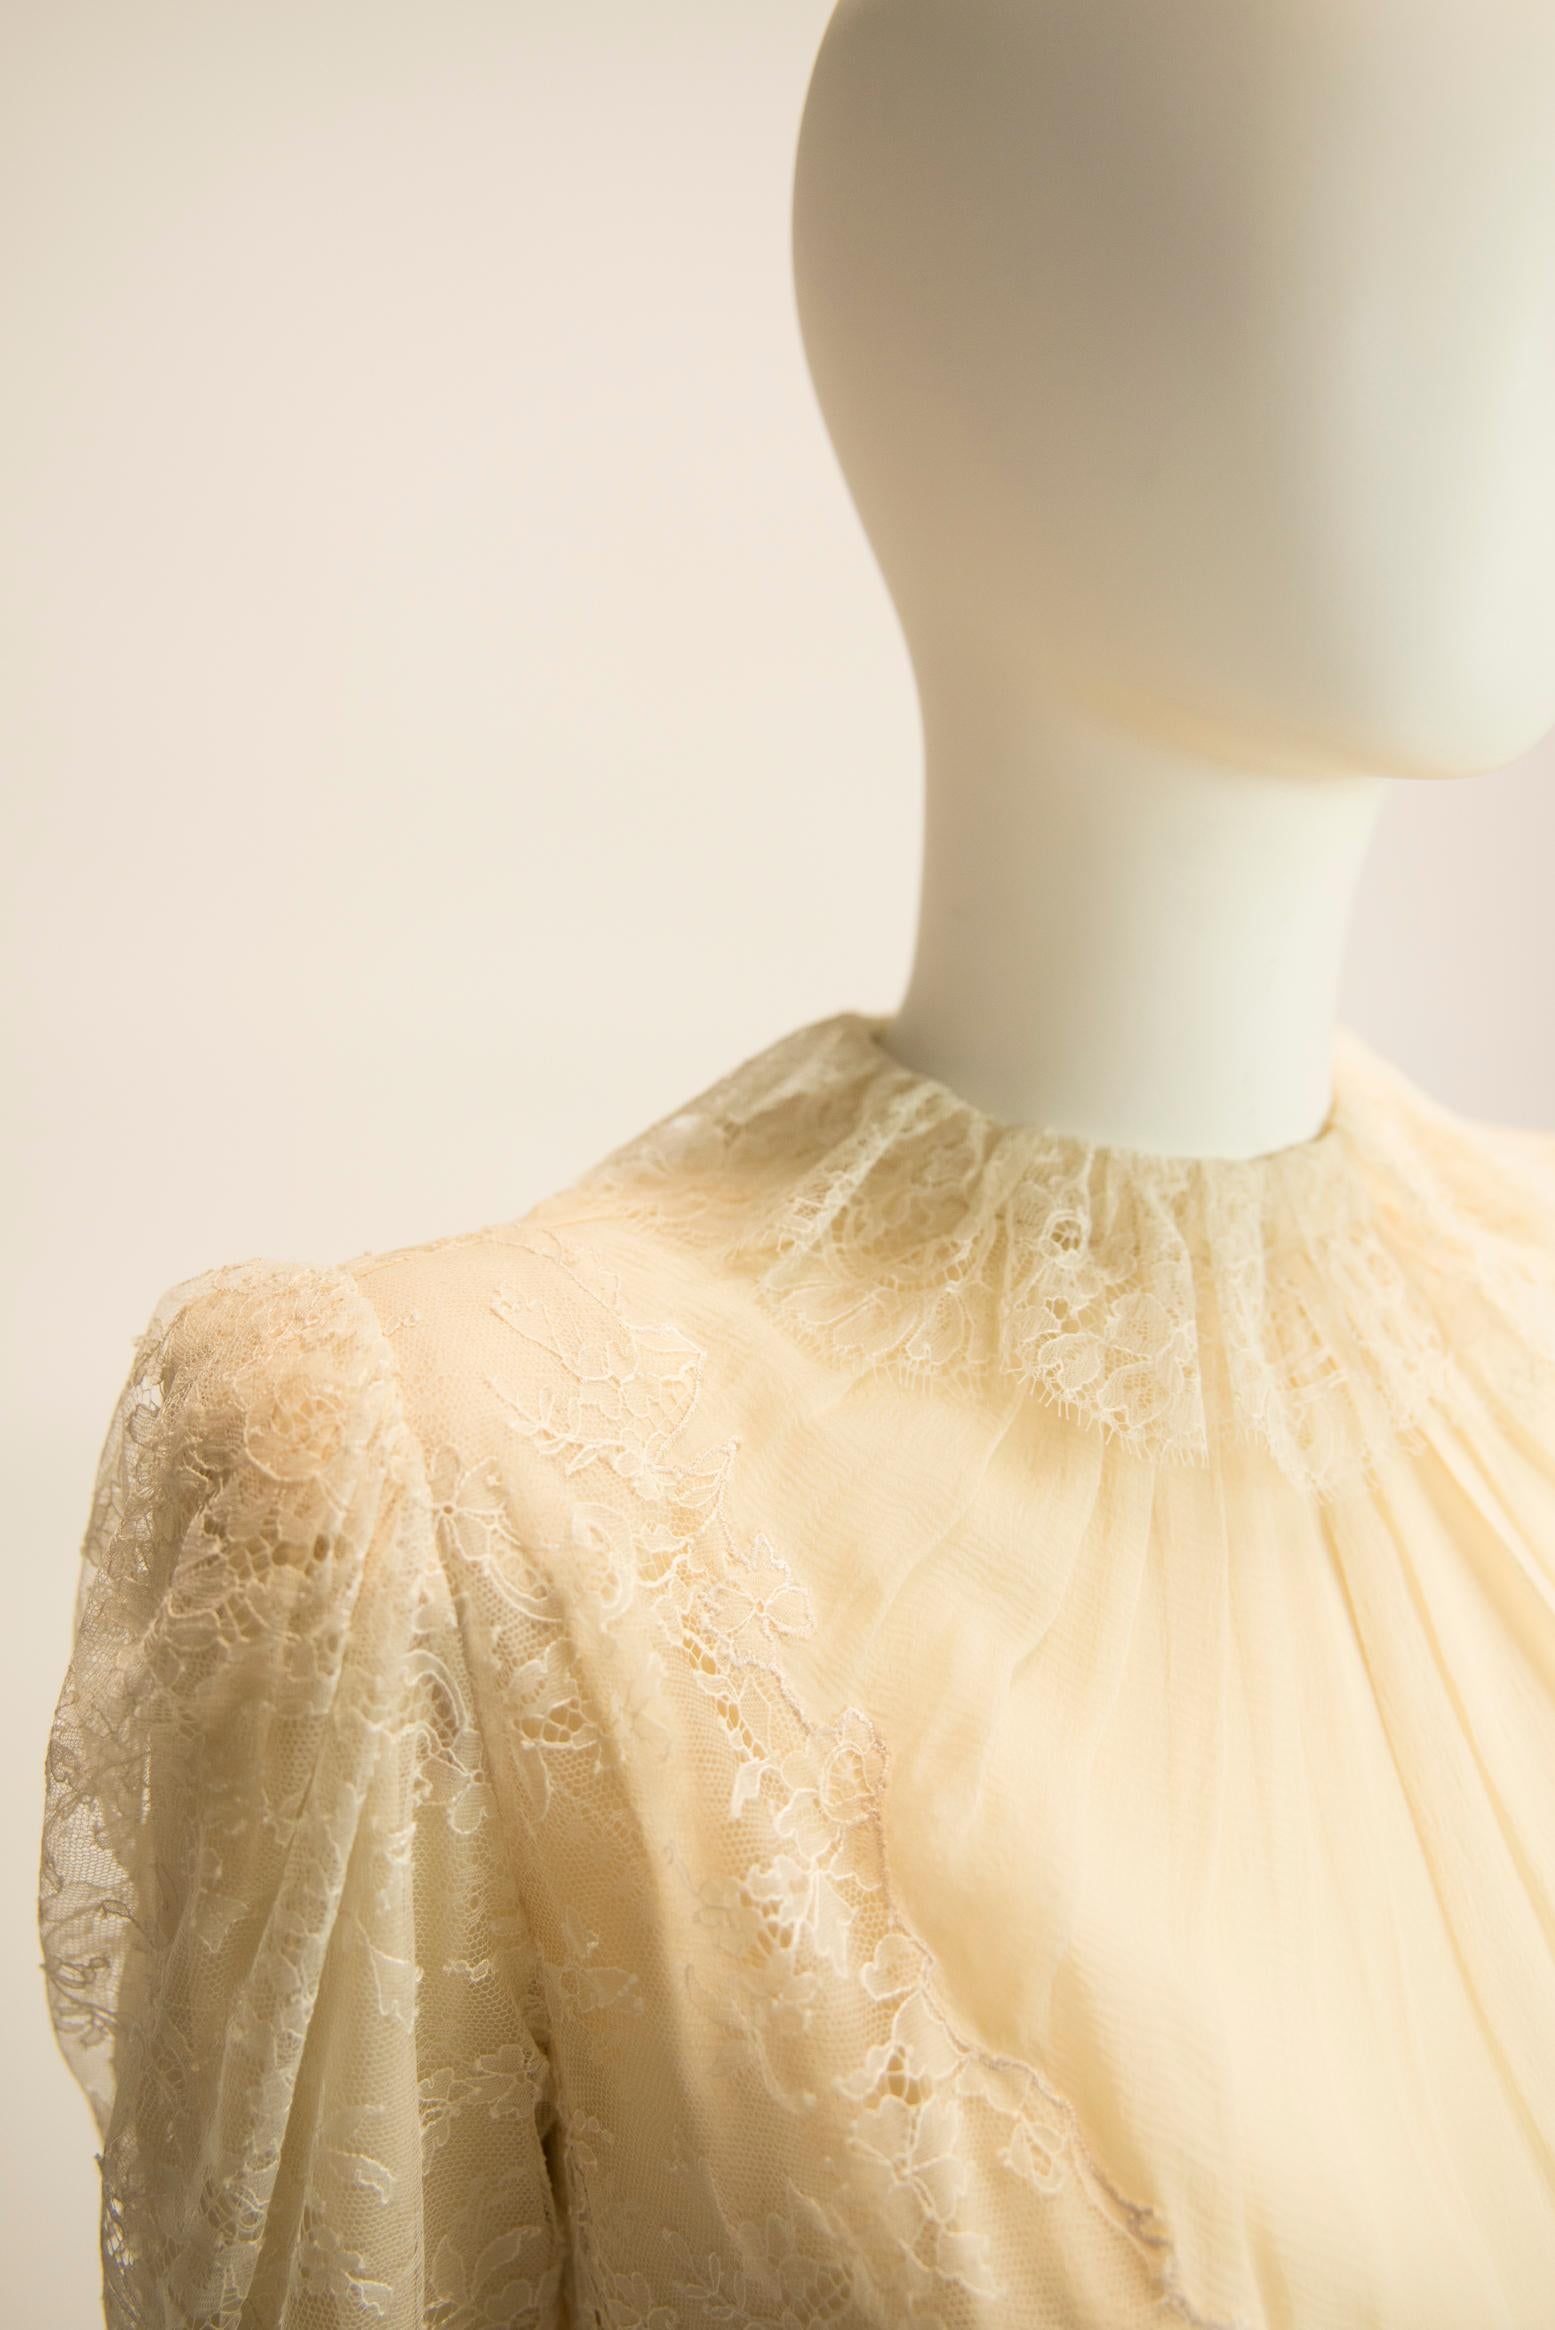 Exquisite Jean Louis Scherrer Couture Silk Chiffon & Lace-Trimmed Dress For Sale 11